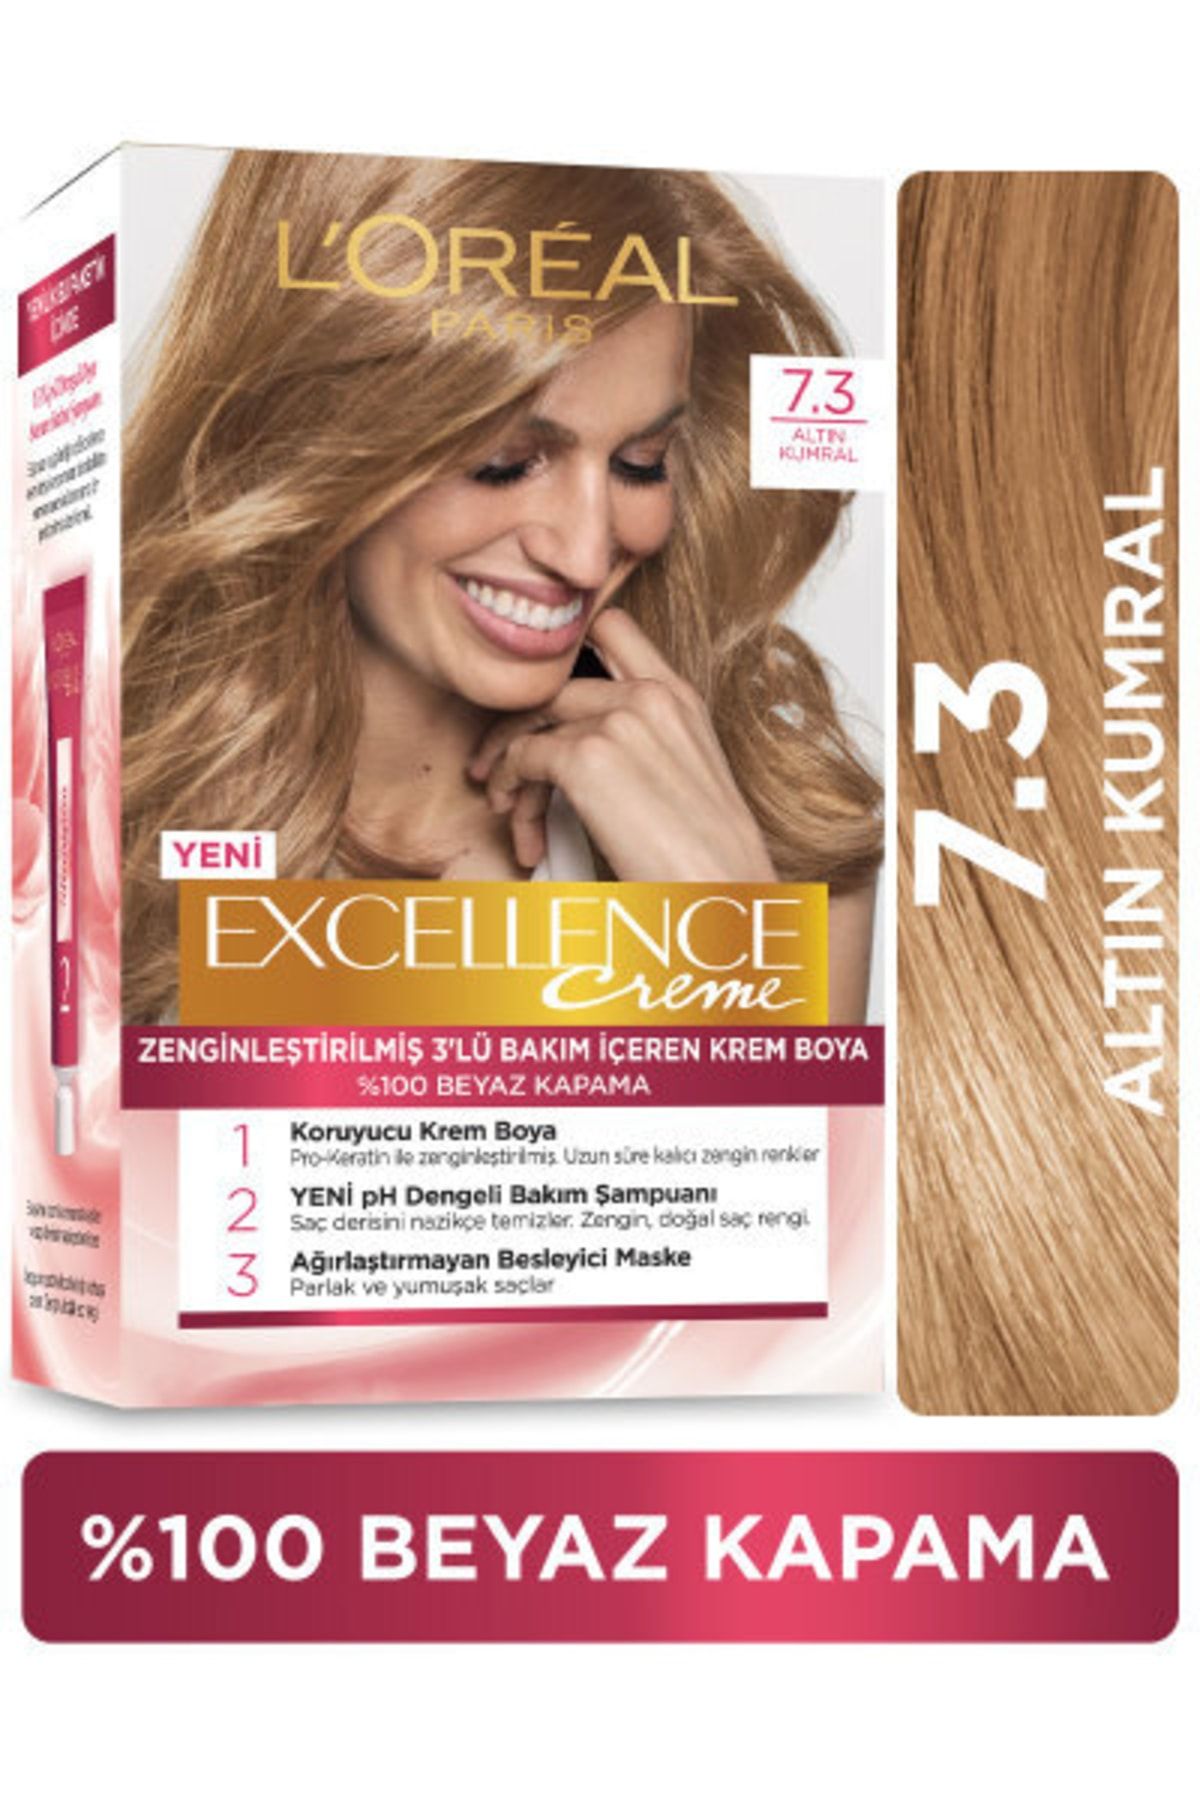 L'Oreal Paris L'oréal Paris Excellence Creme Saç Boyası - 7.3 Altın Kumral